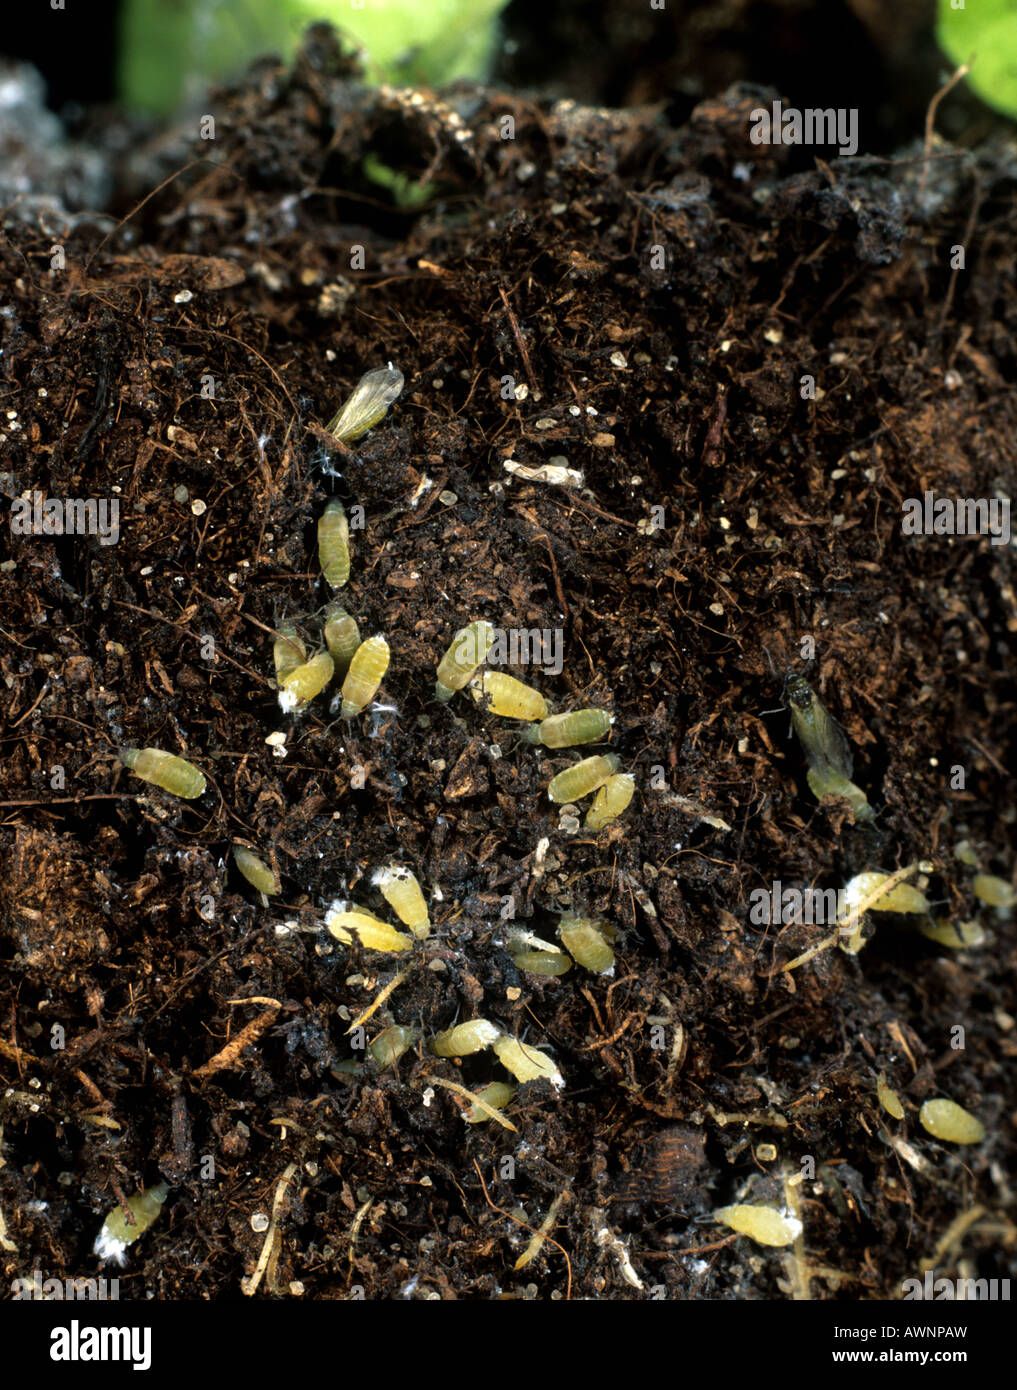 Salat Wurzel Blattlaus Pemphigus Bursarius Kolonie auf Salat Wurzeln Stockfoto